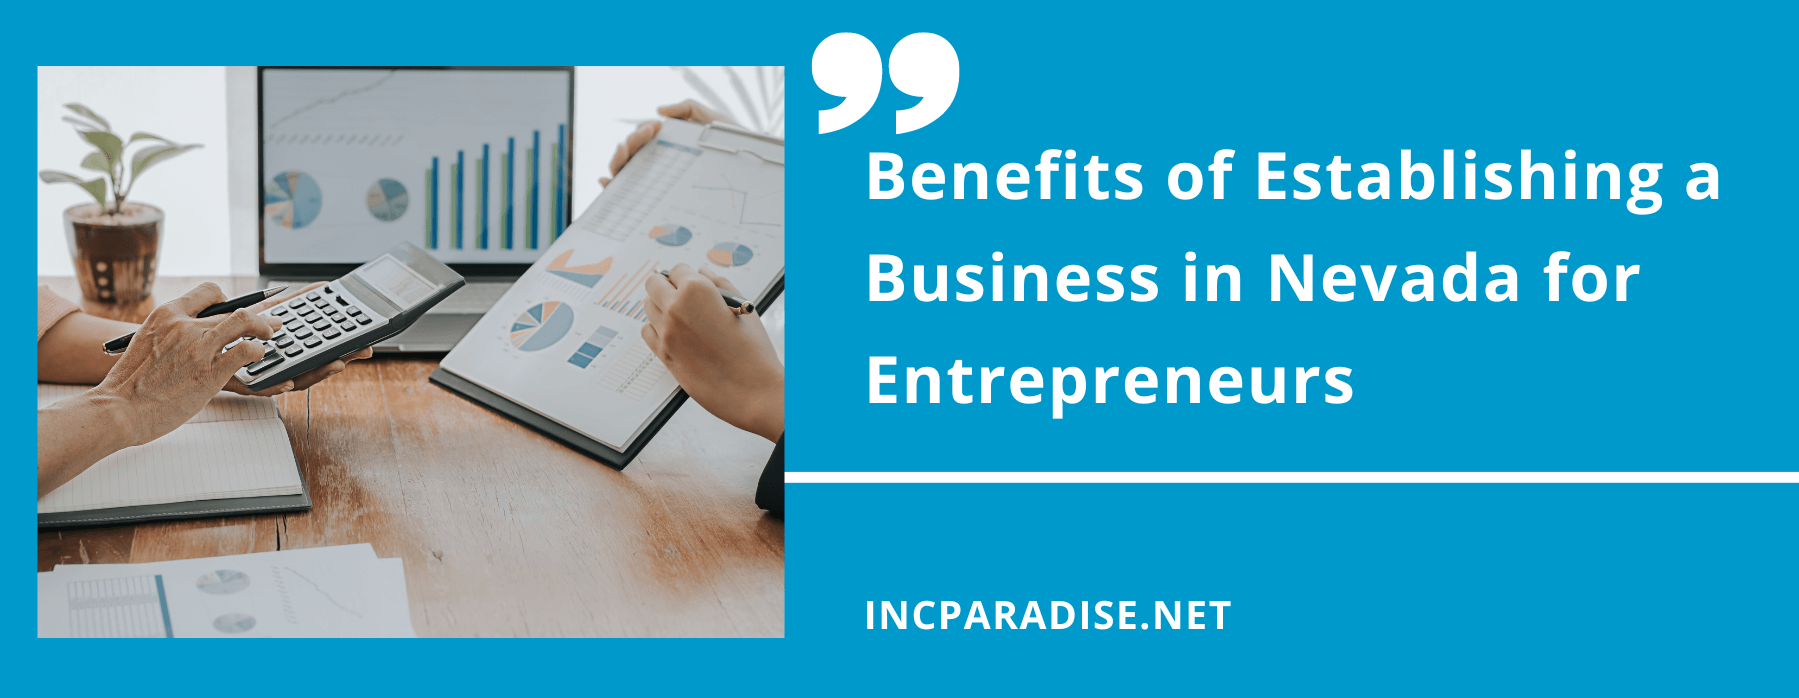 Benefits of Establishing a Business in Nevada for Entrepreneurs